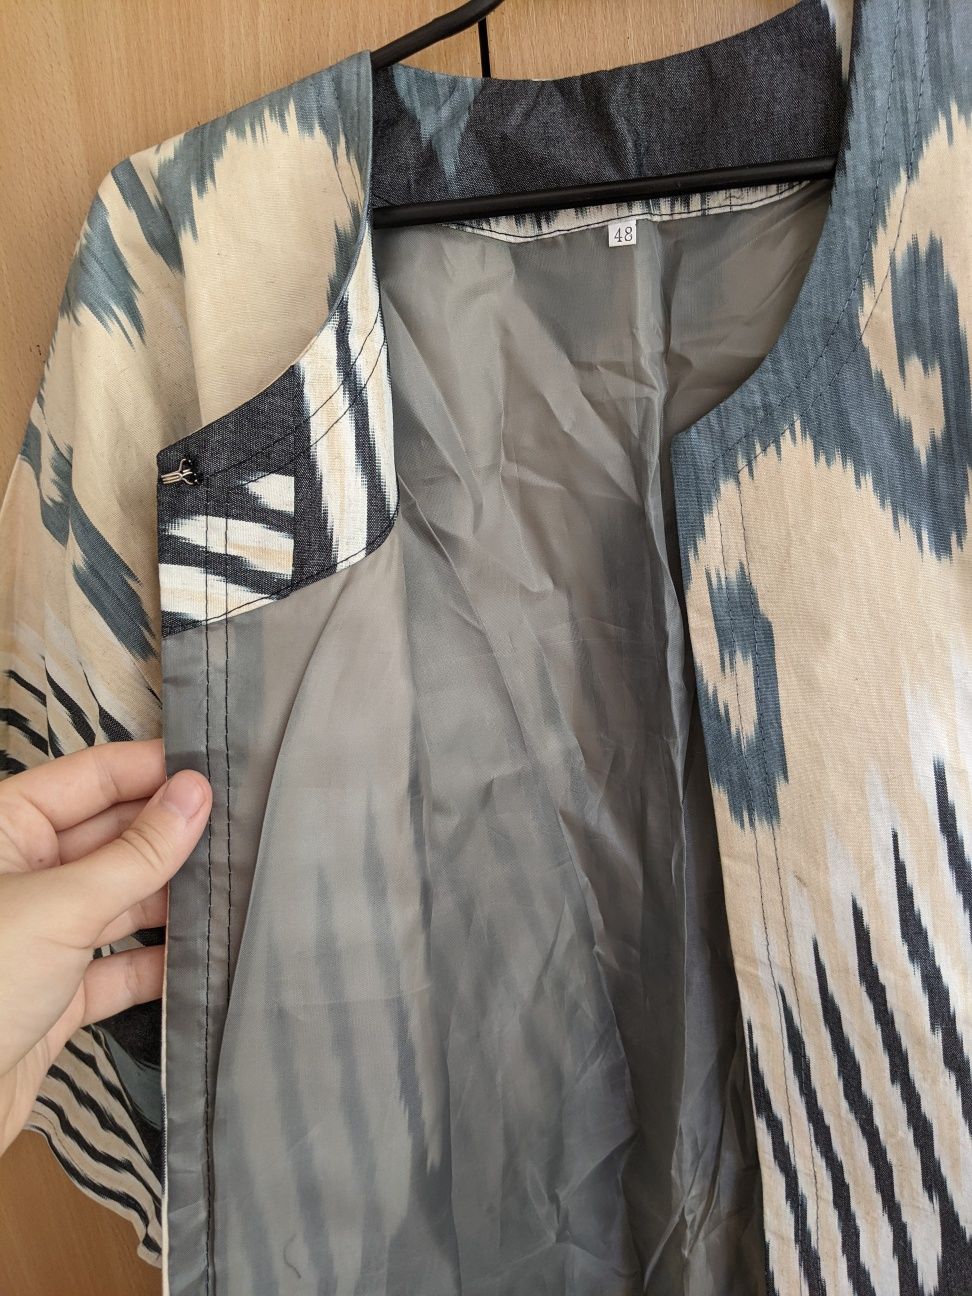 Узбецький халат (чапан) з тканини ікат